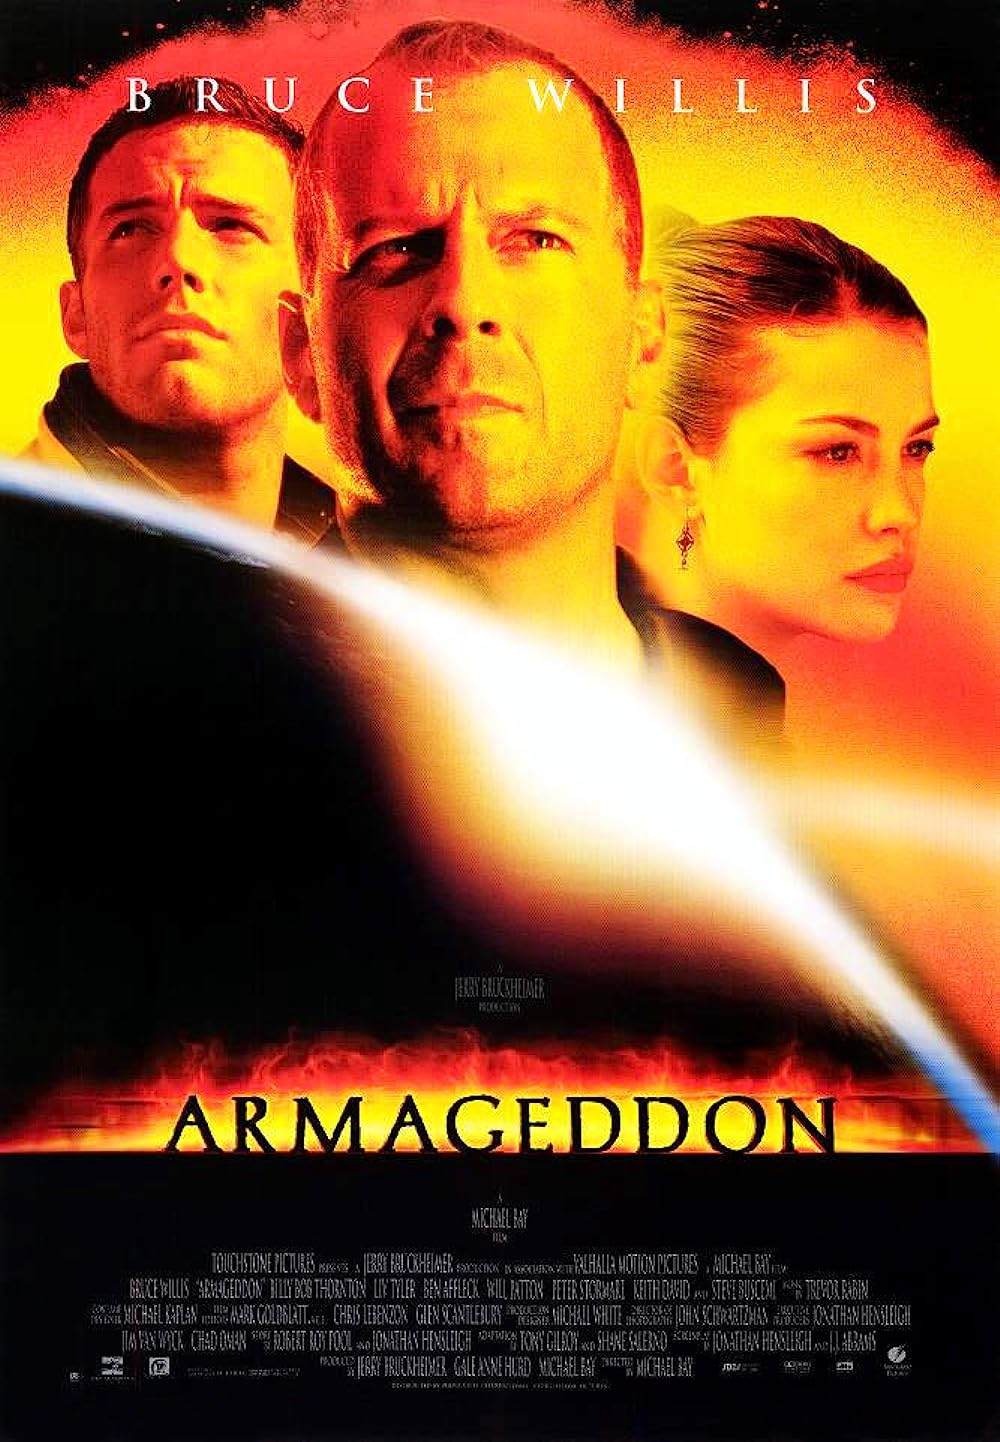 FULL MOVIE: Armageddon (1998) [Action]